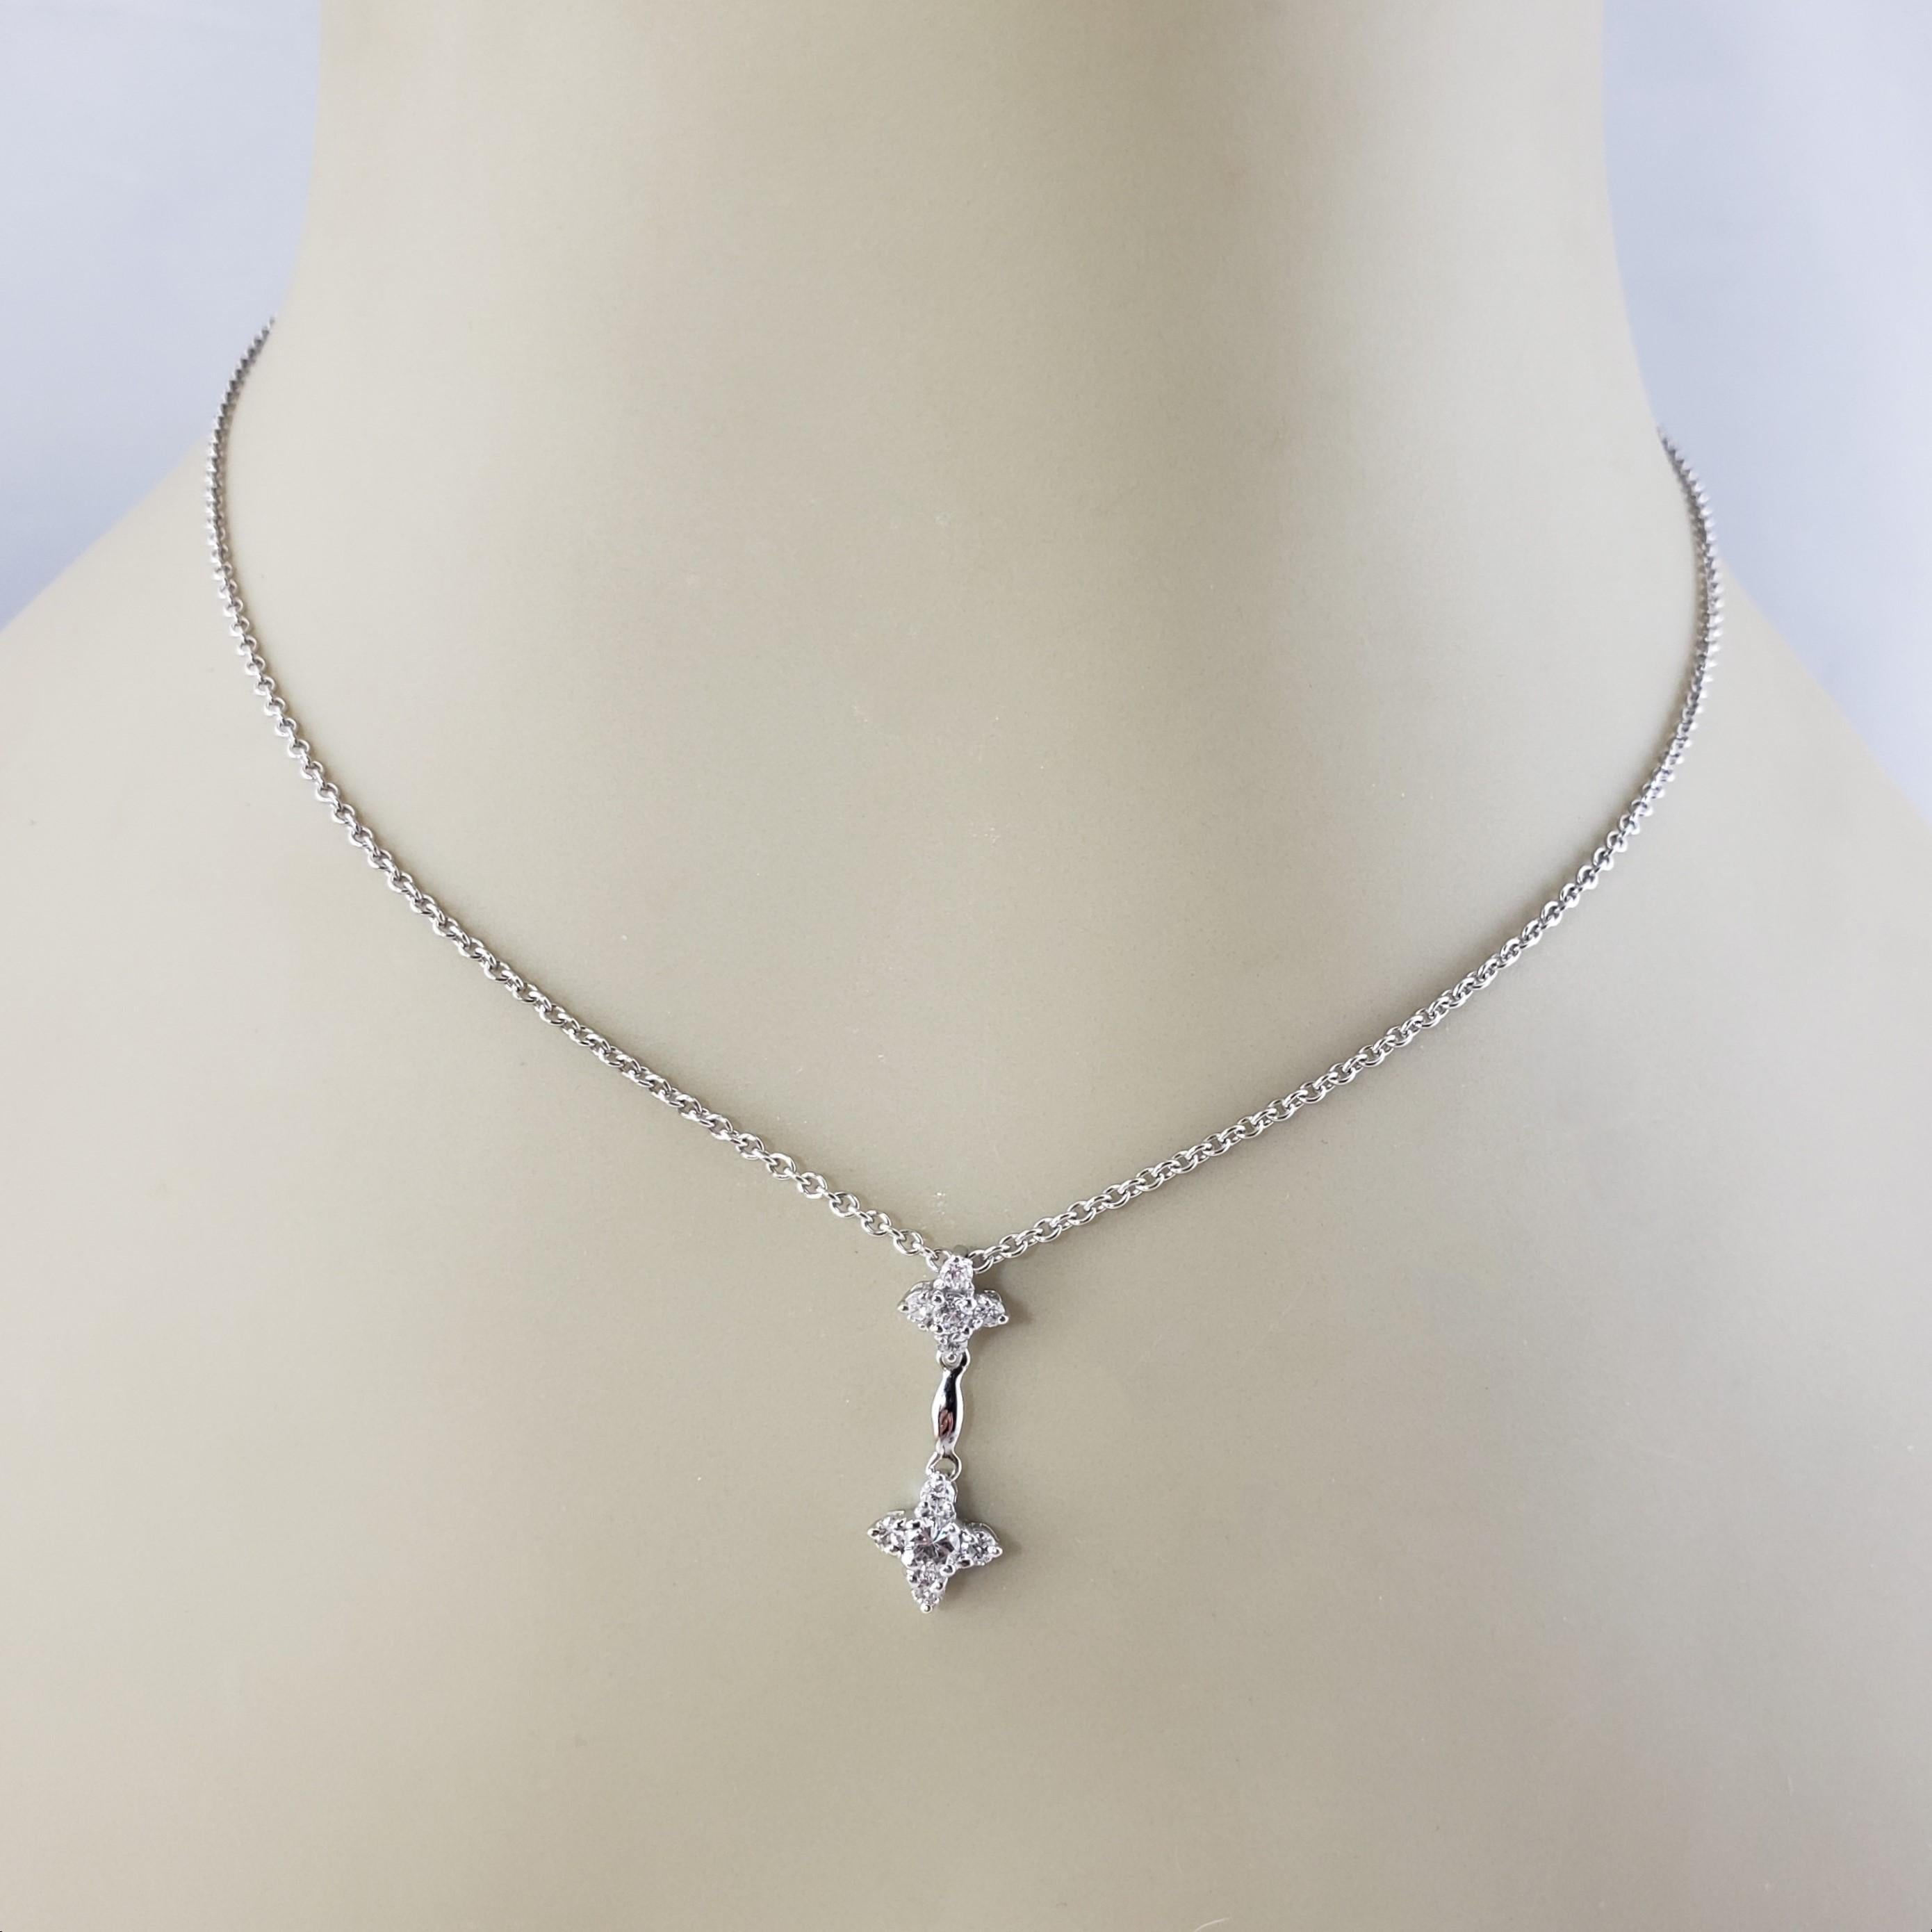  14 Karat White Gold Diamond Pendant Necklace #15501 For Sale 1